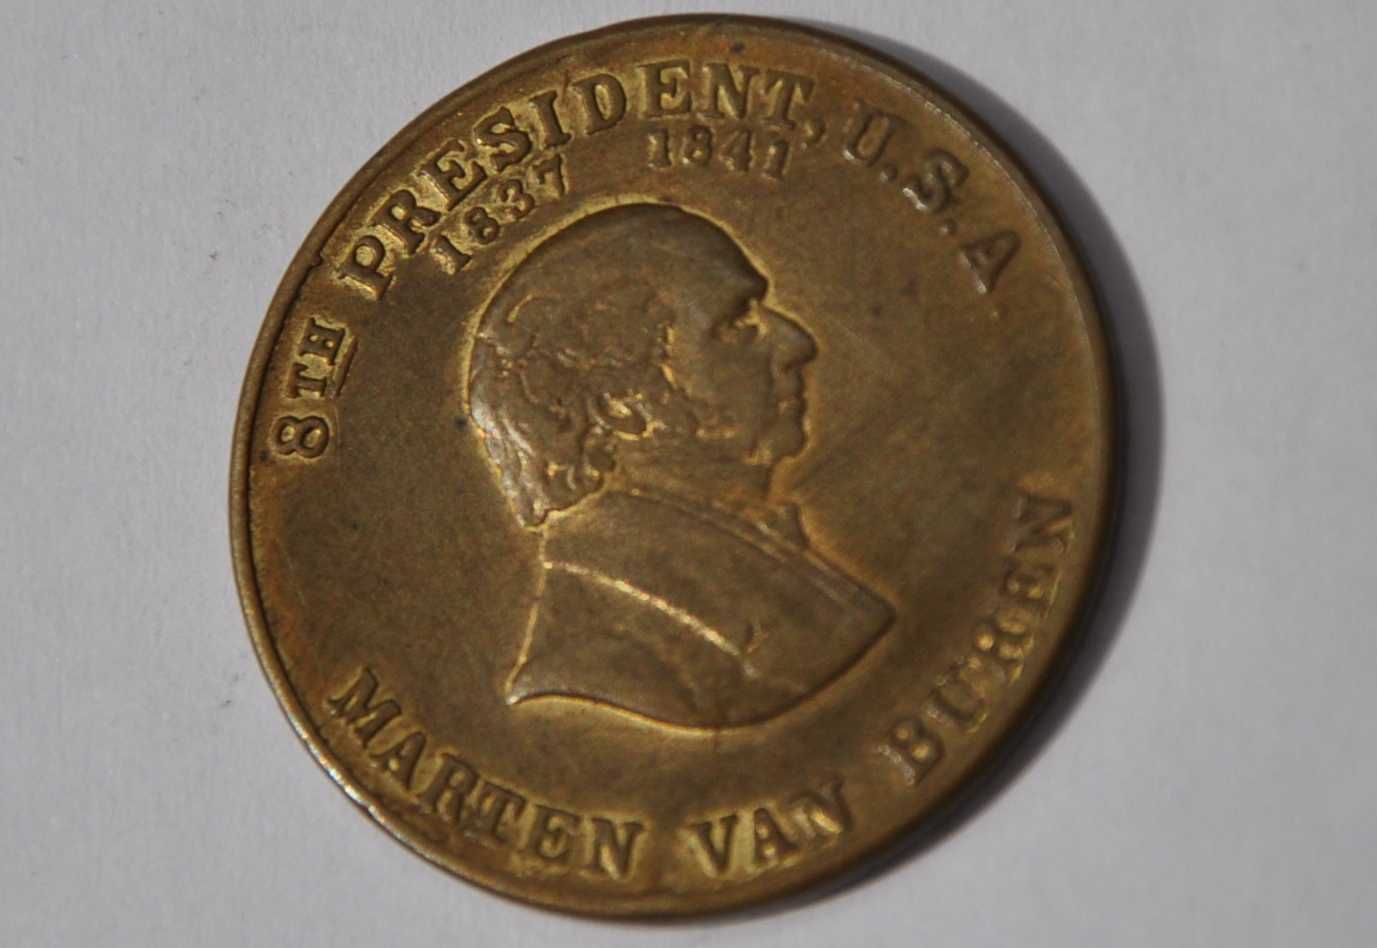 USA, Medal -8 prezydent , Marten van Buren